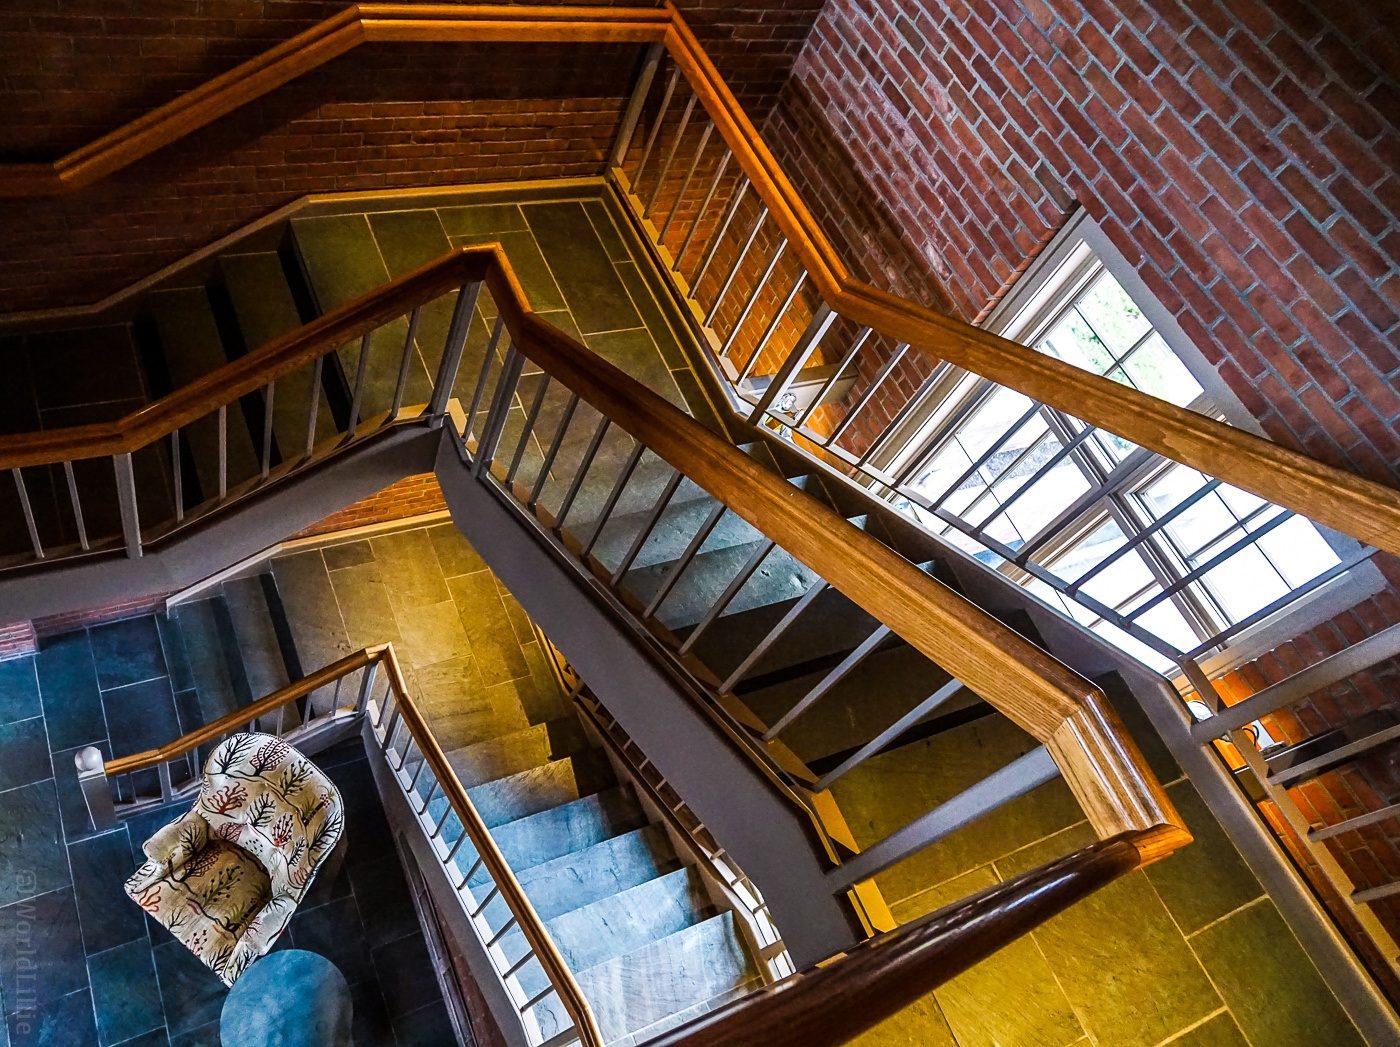 A vertiginous look down a side staircase.